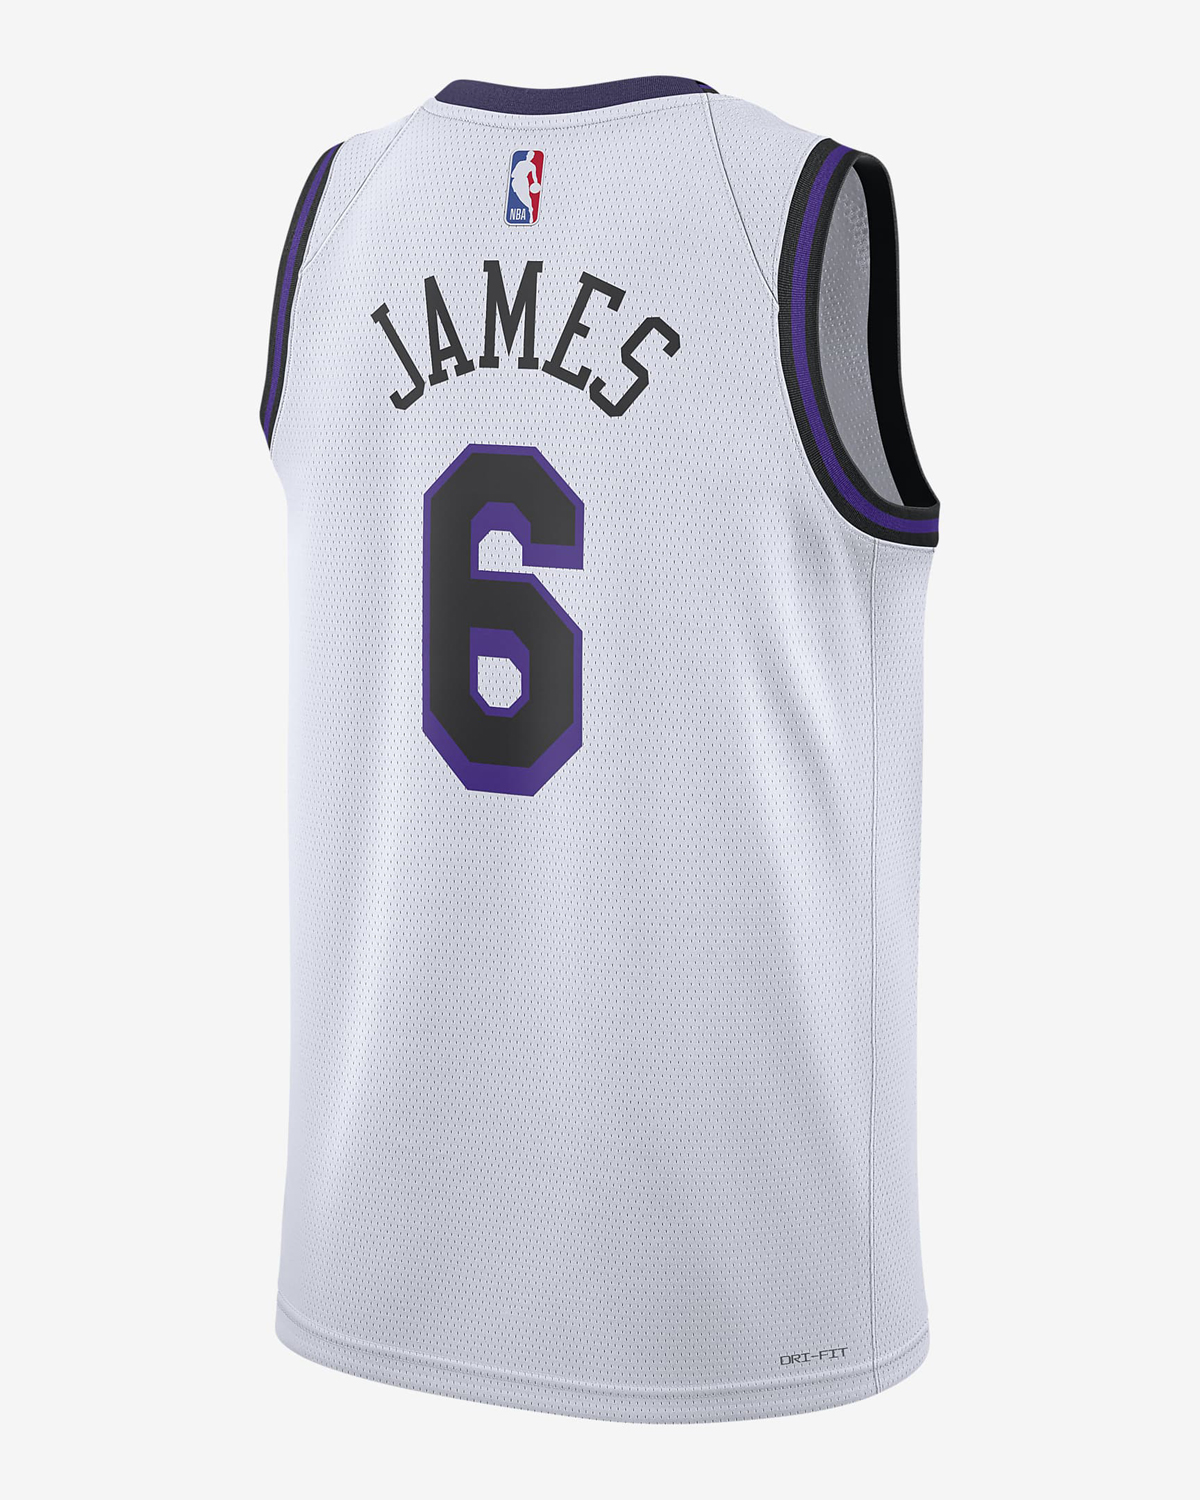 Nike-LeBron-James-LA-Lakers-City-Edition-Jersey-2